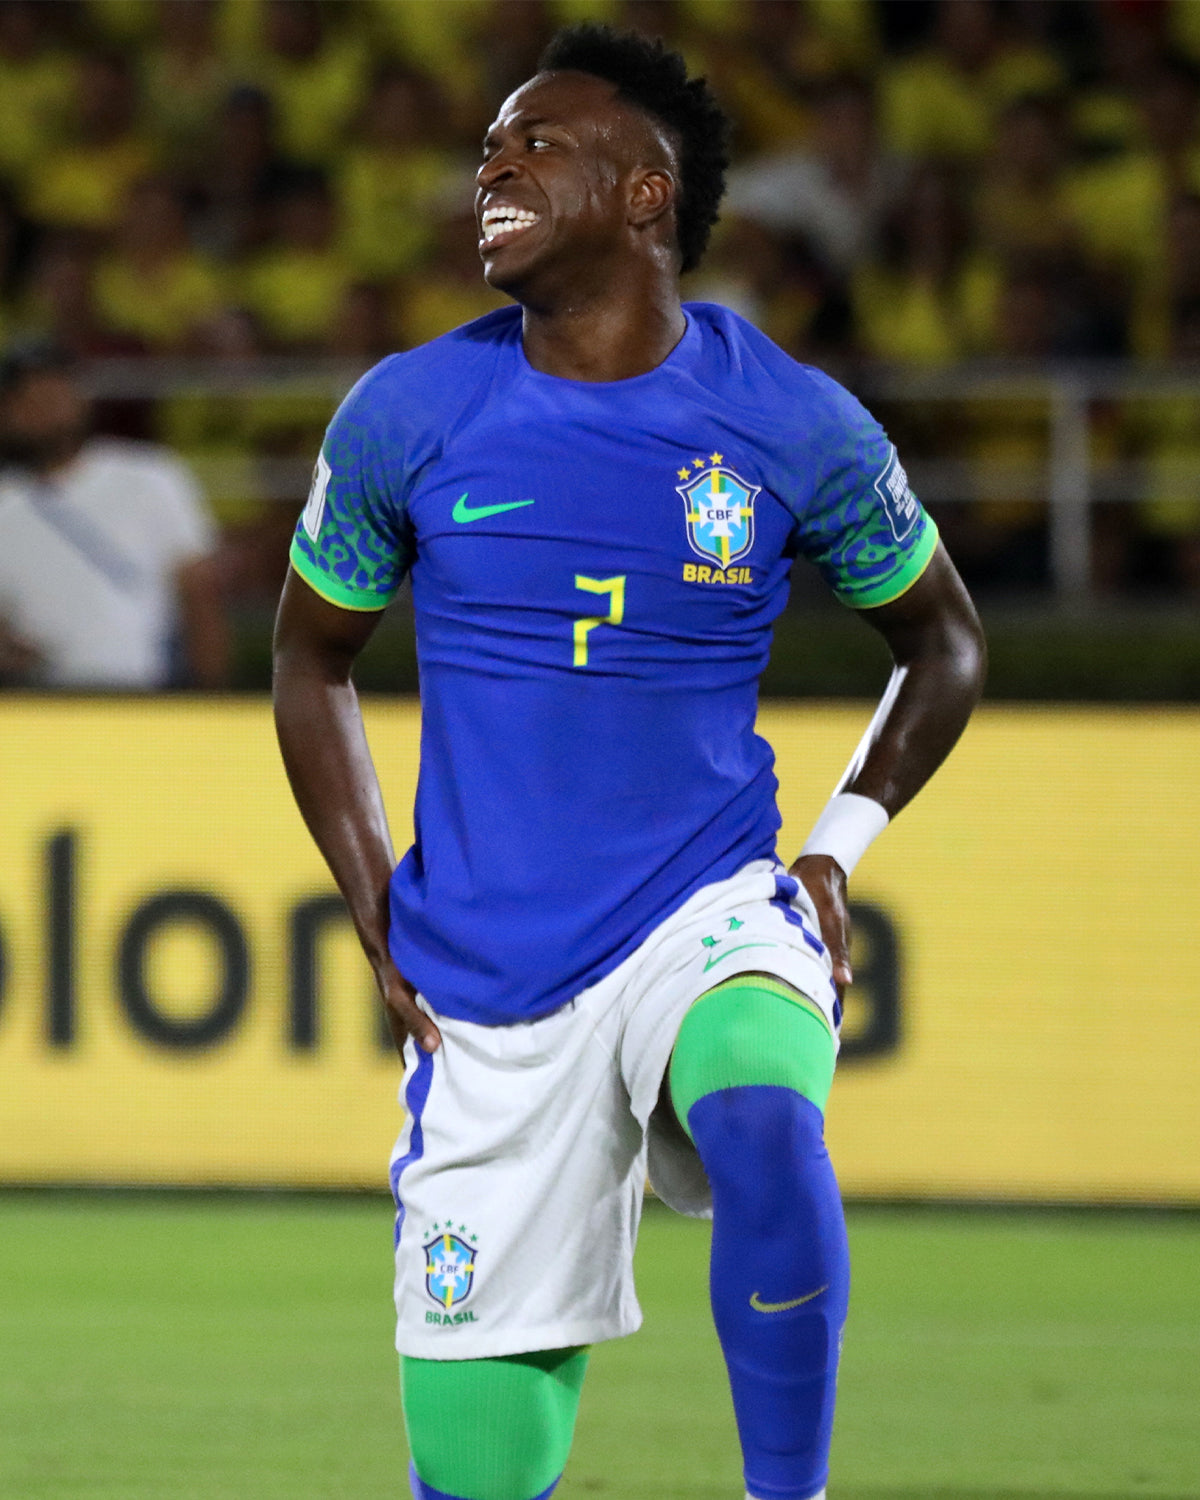 Vinicius Junior Brazil National Soccer Team 2022 World Cup Nike On-Field Away Player Jersey - Blue